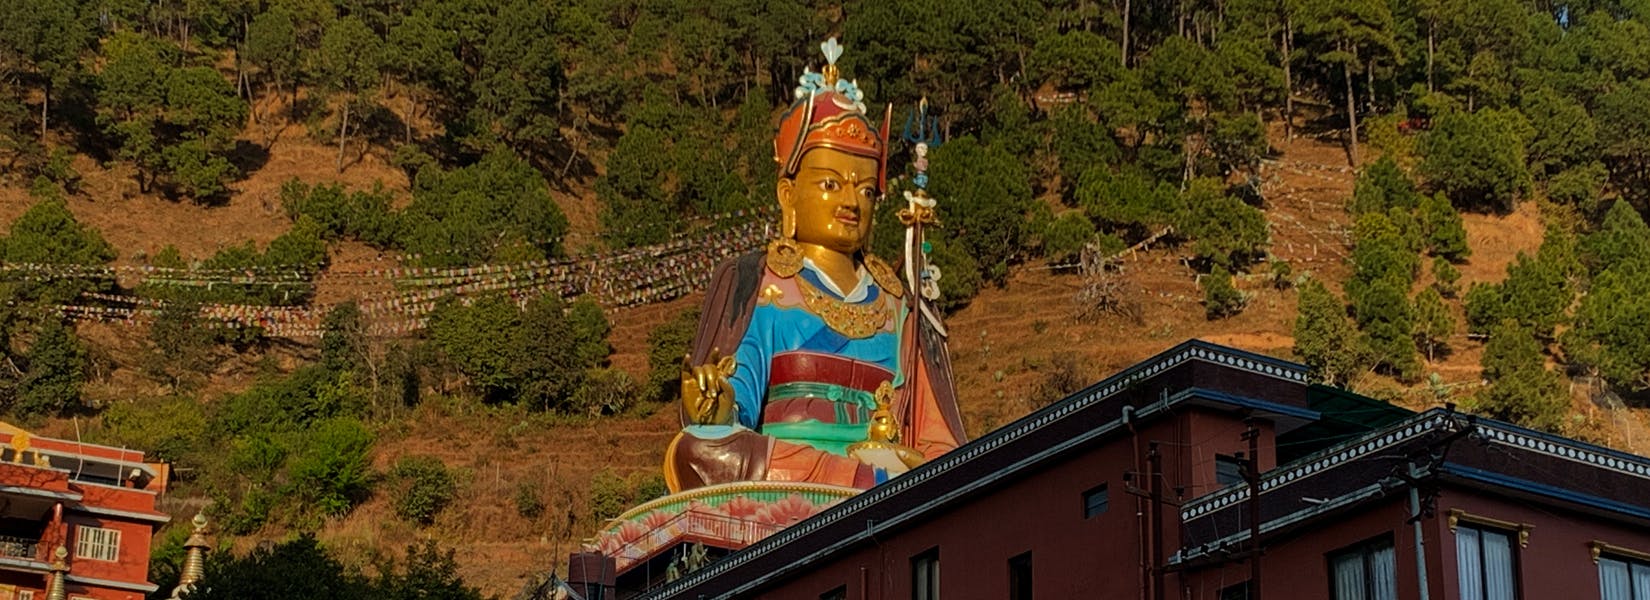 Guru Rinpoche Padmasambhava Pilgrimage Tour - <span class="font-light">10 days</span>